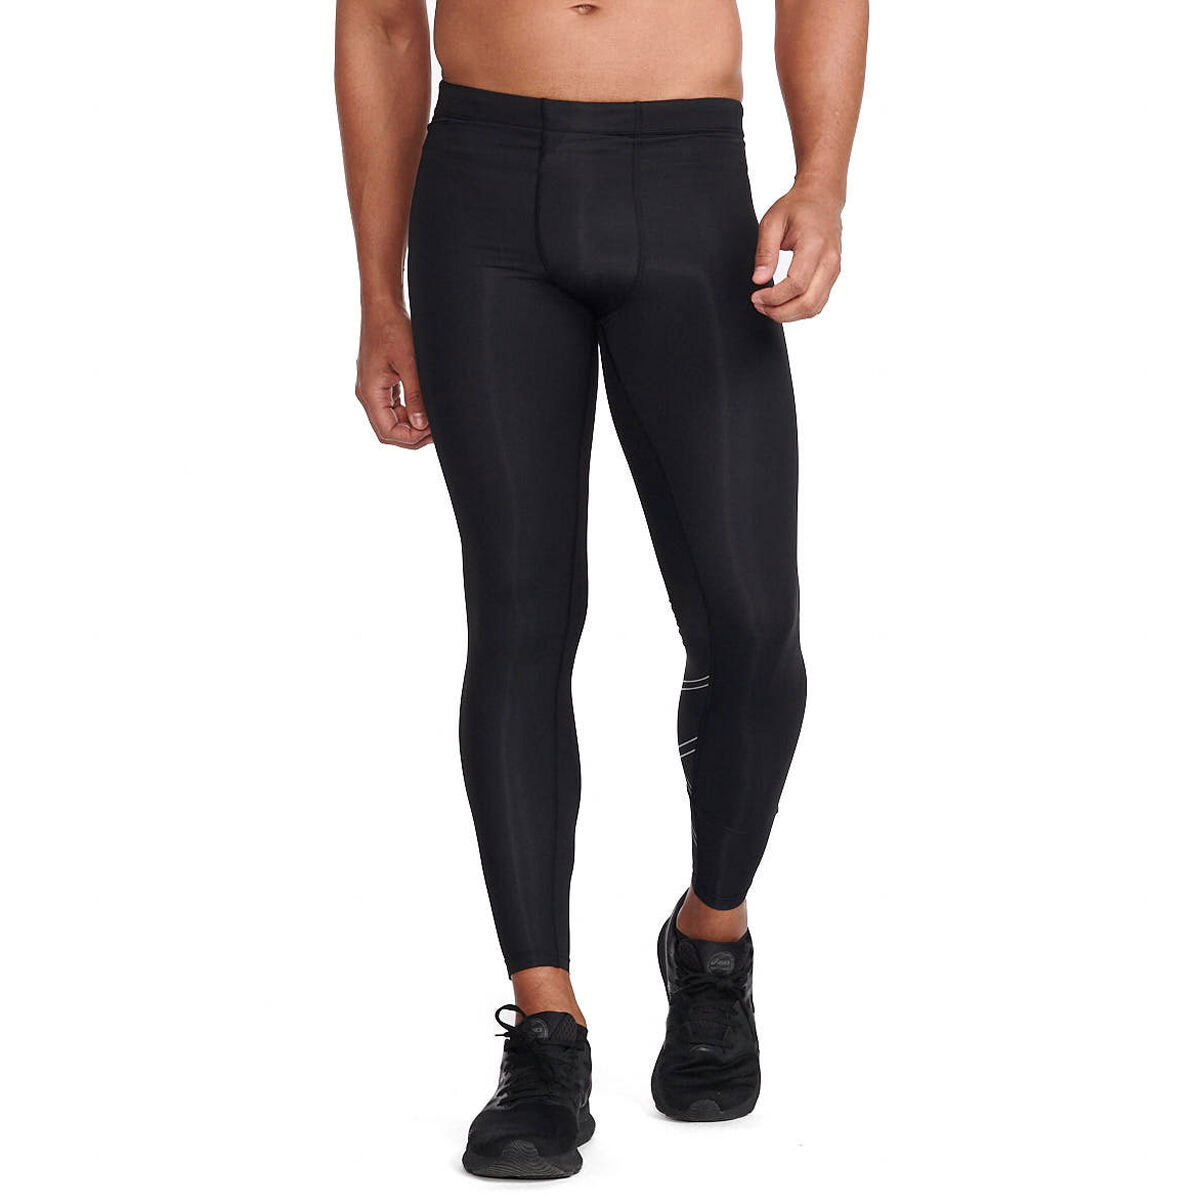 Buy Puma mens compression leggings black Online